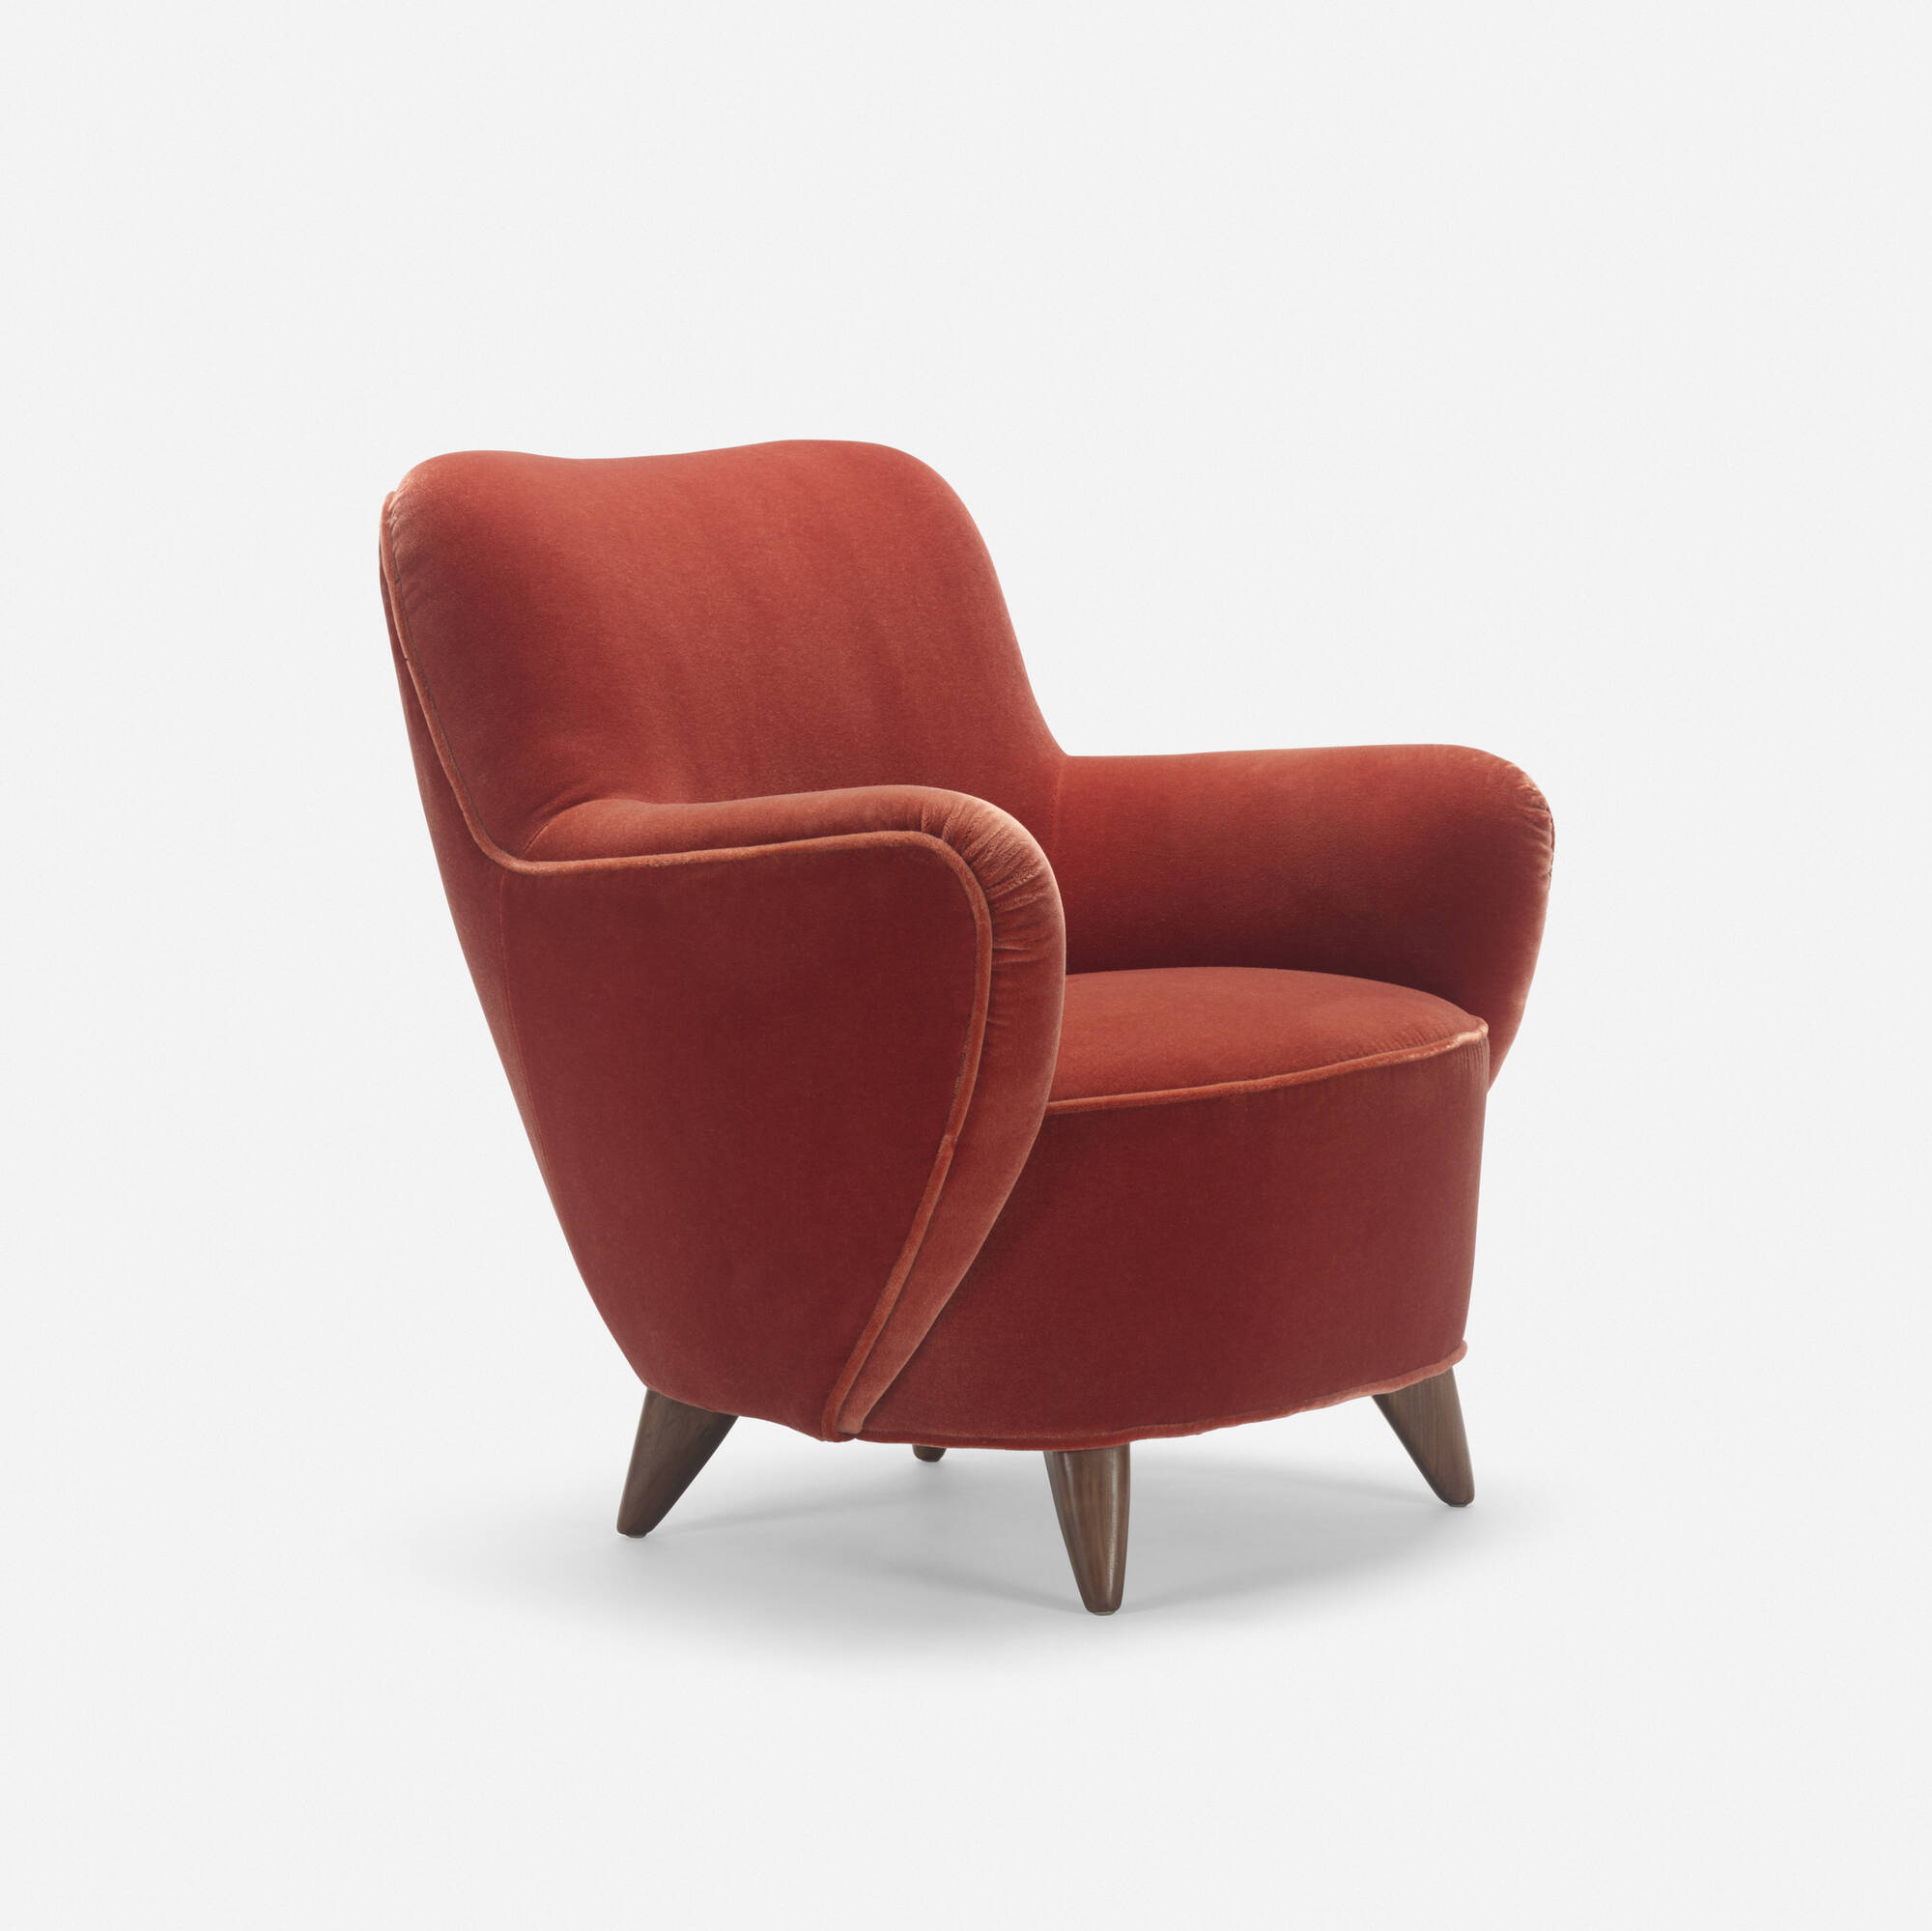 359: VLADIMIR KAGAN, Barrel lounge chair, model 100A